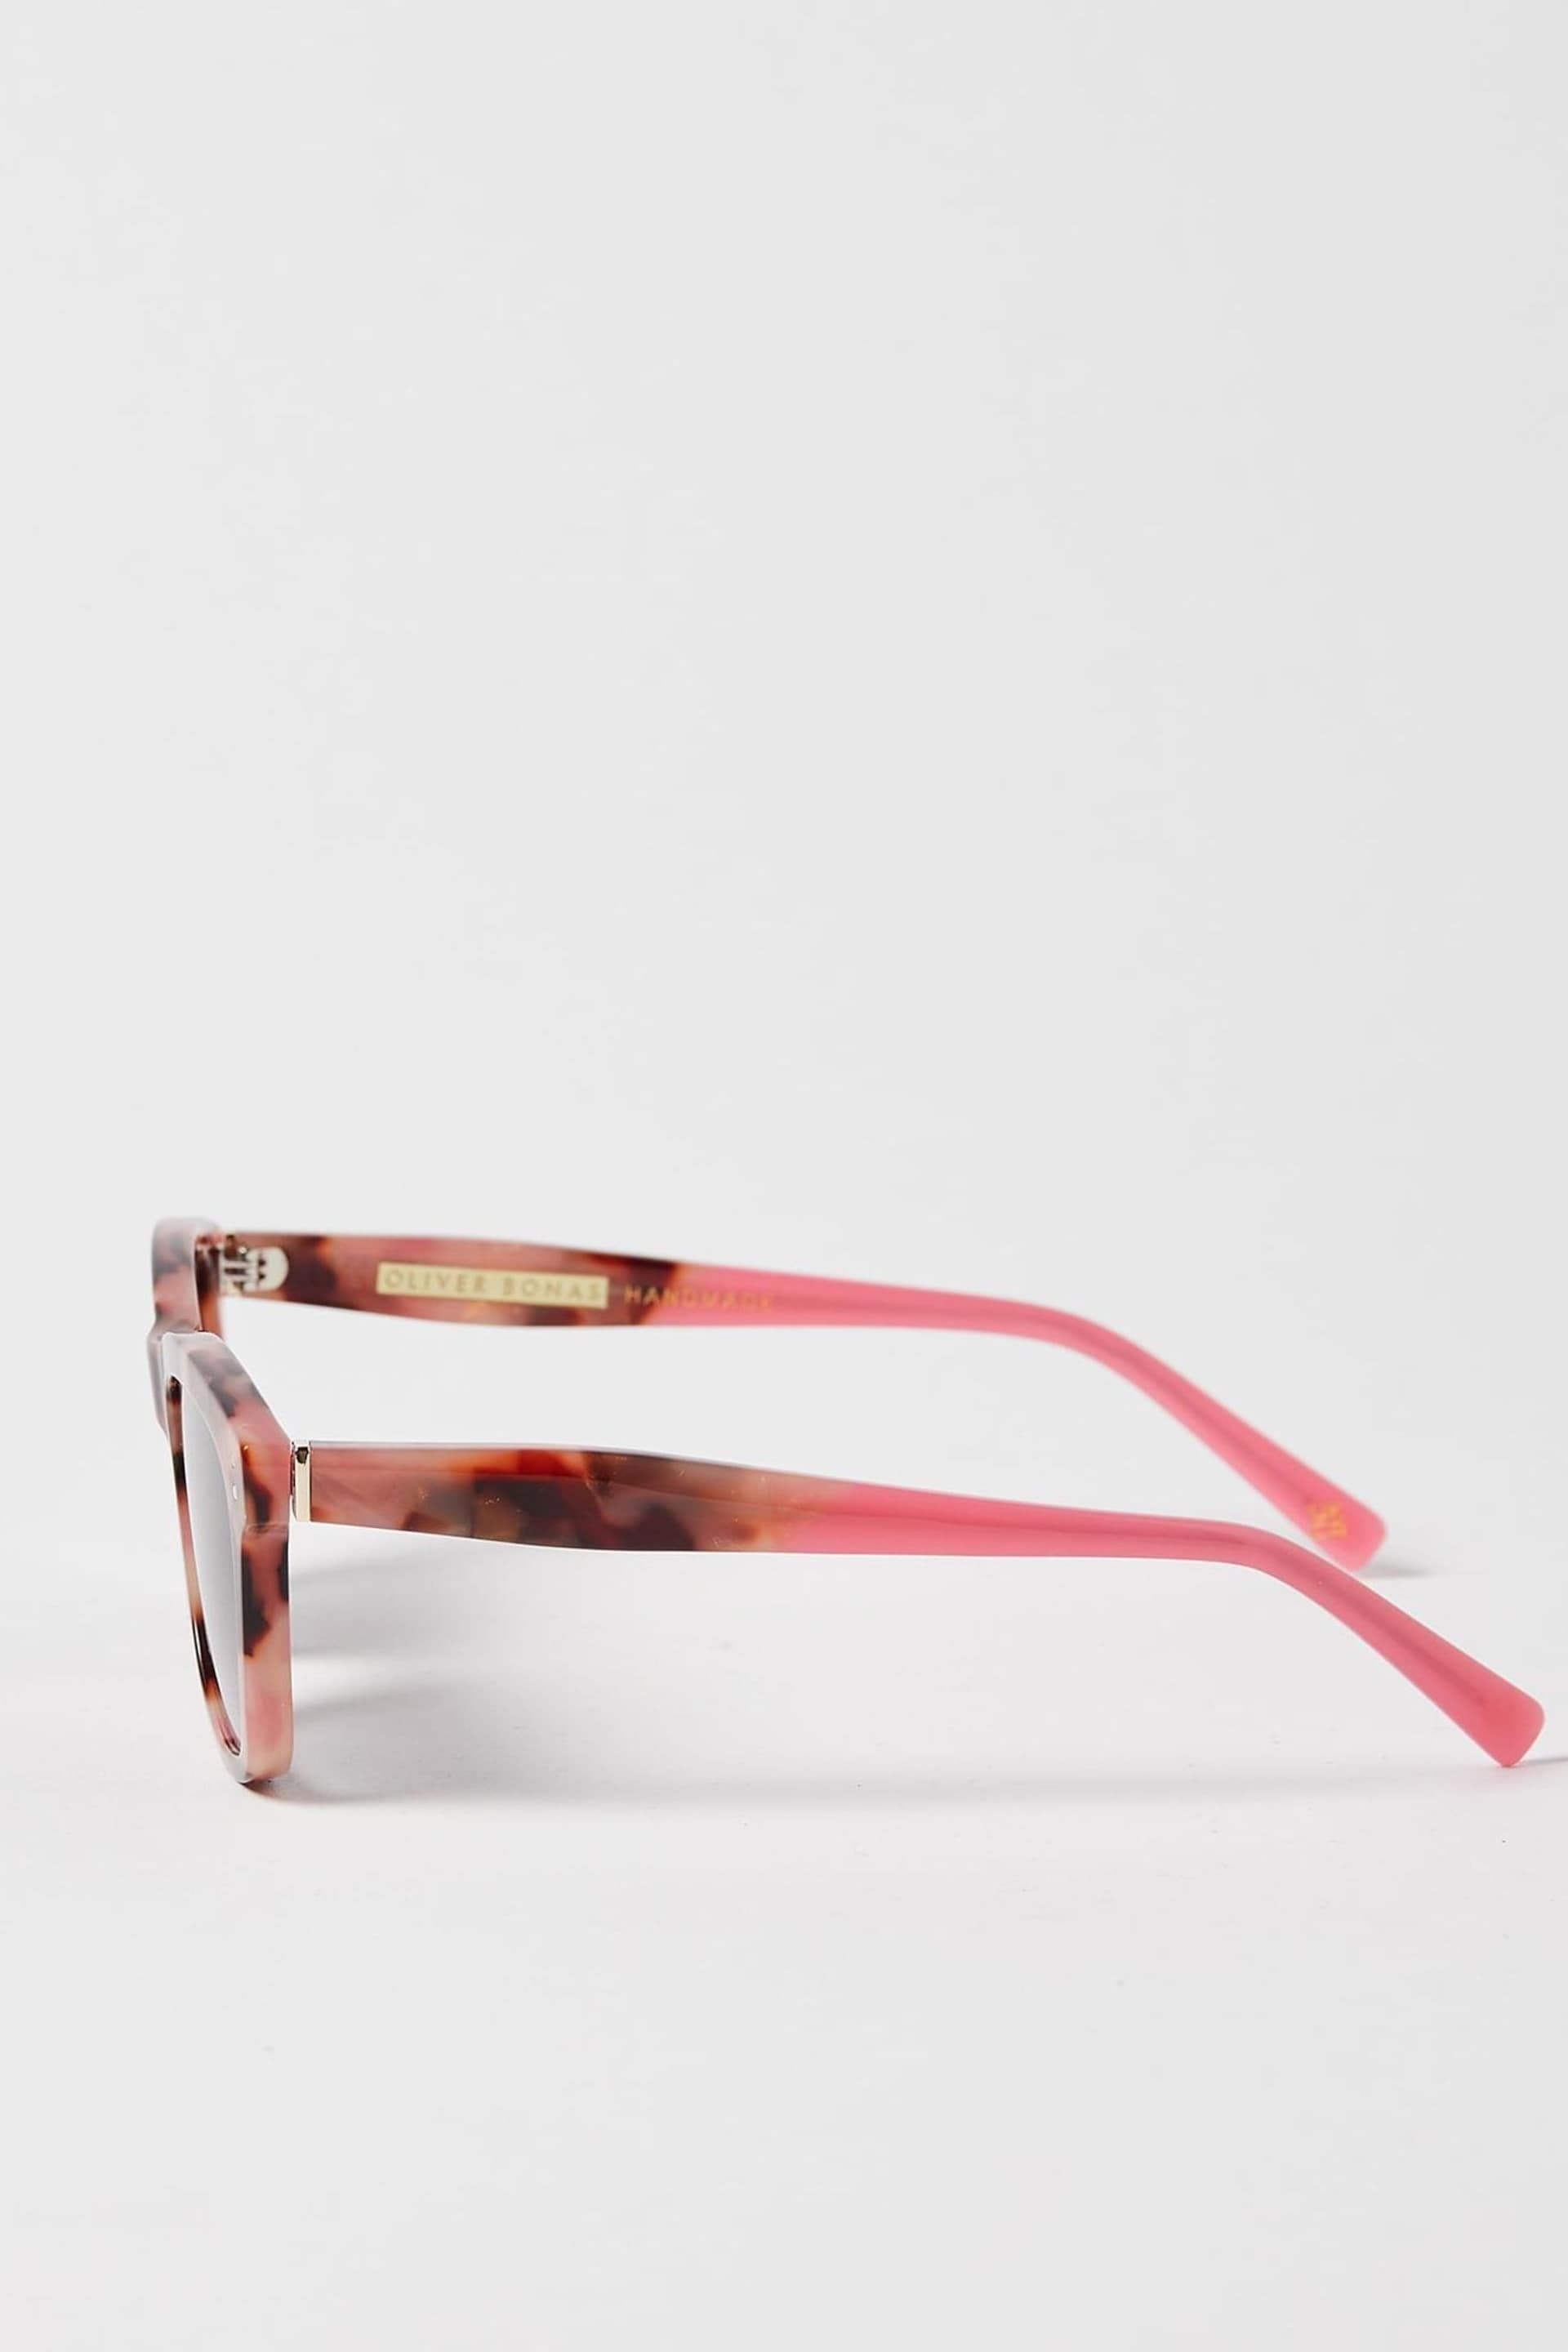 Oliver Bonas Pink Faux Tortoiseshell Pink Rectangle Acetate Sunglasses - Image 3 of 5